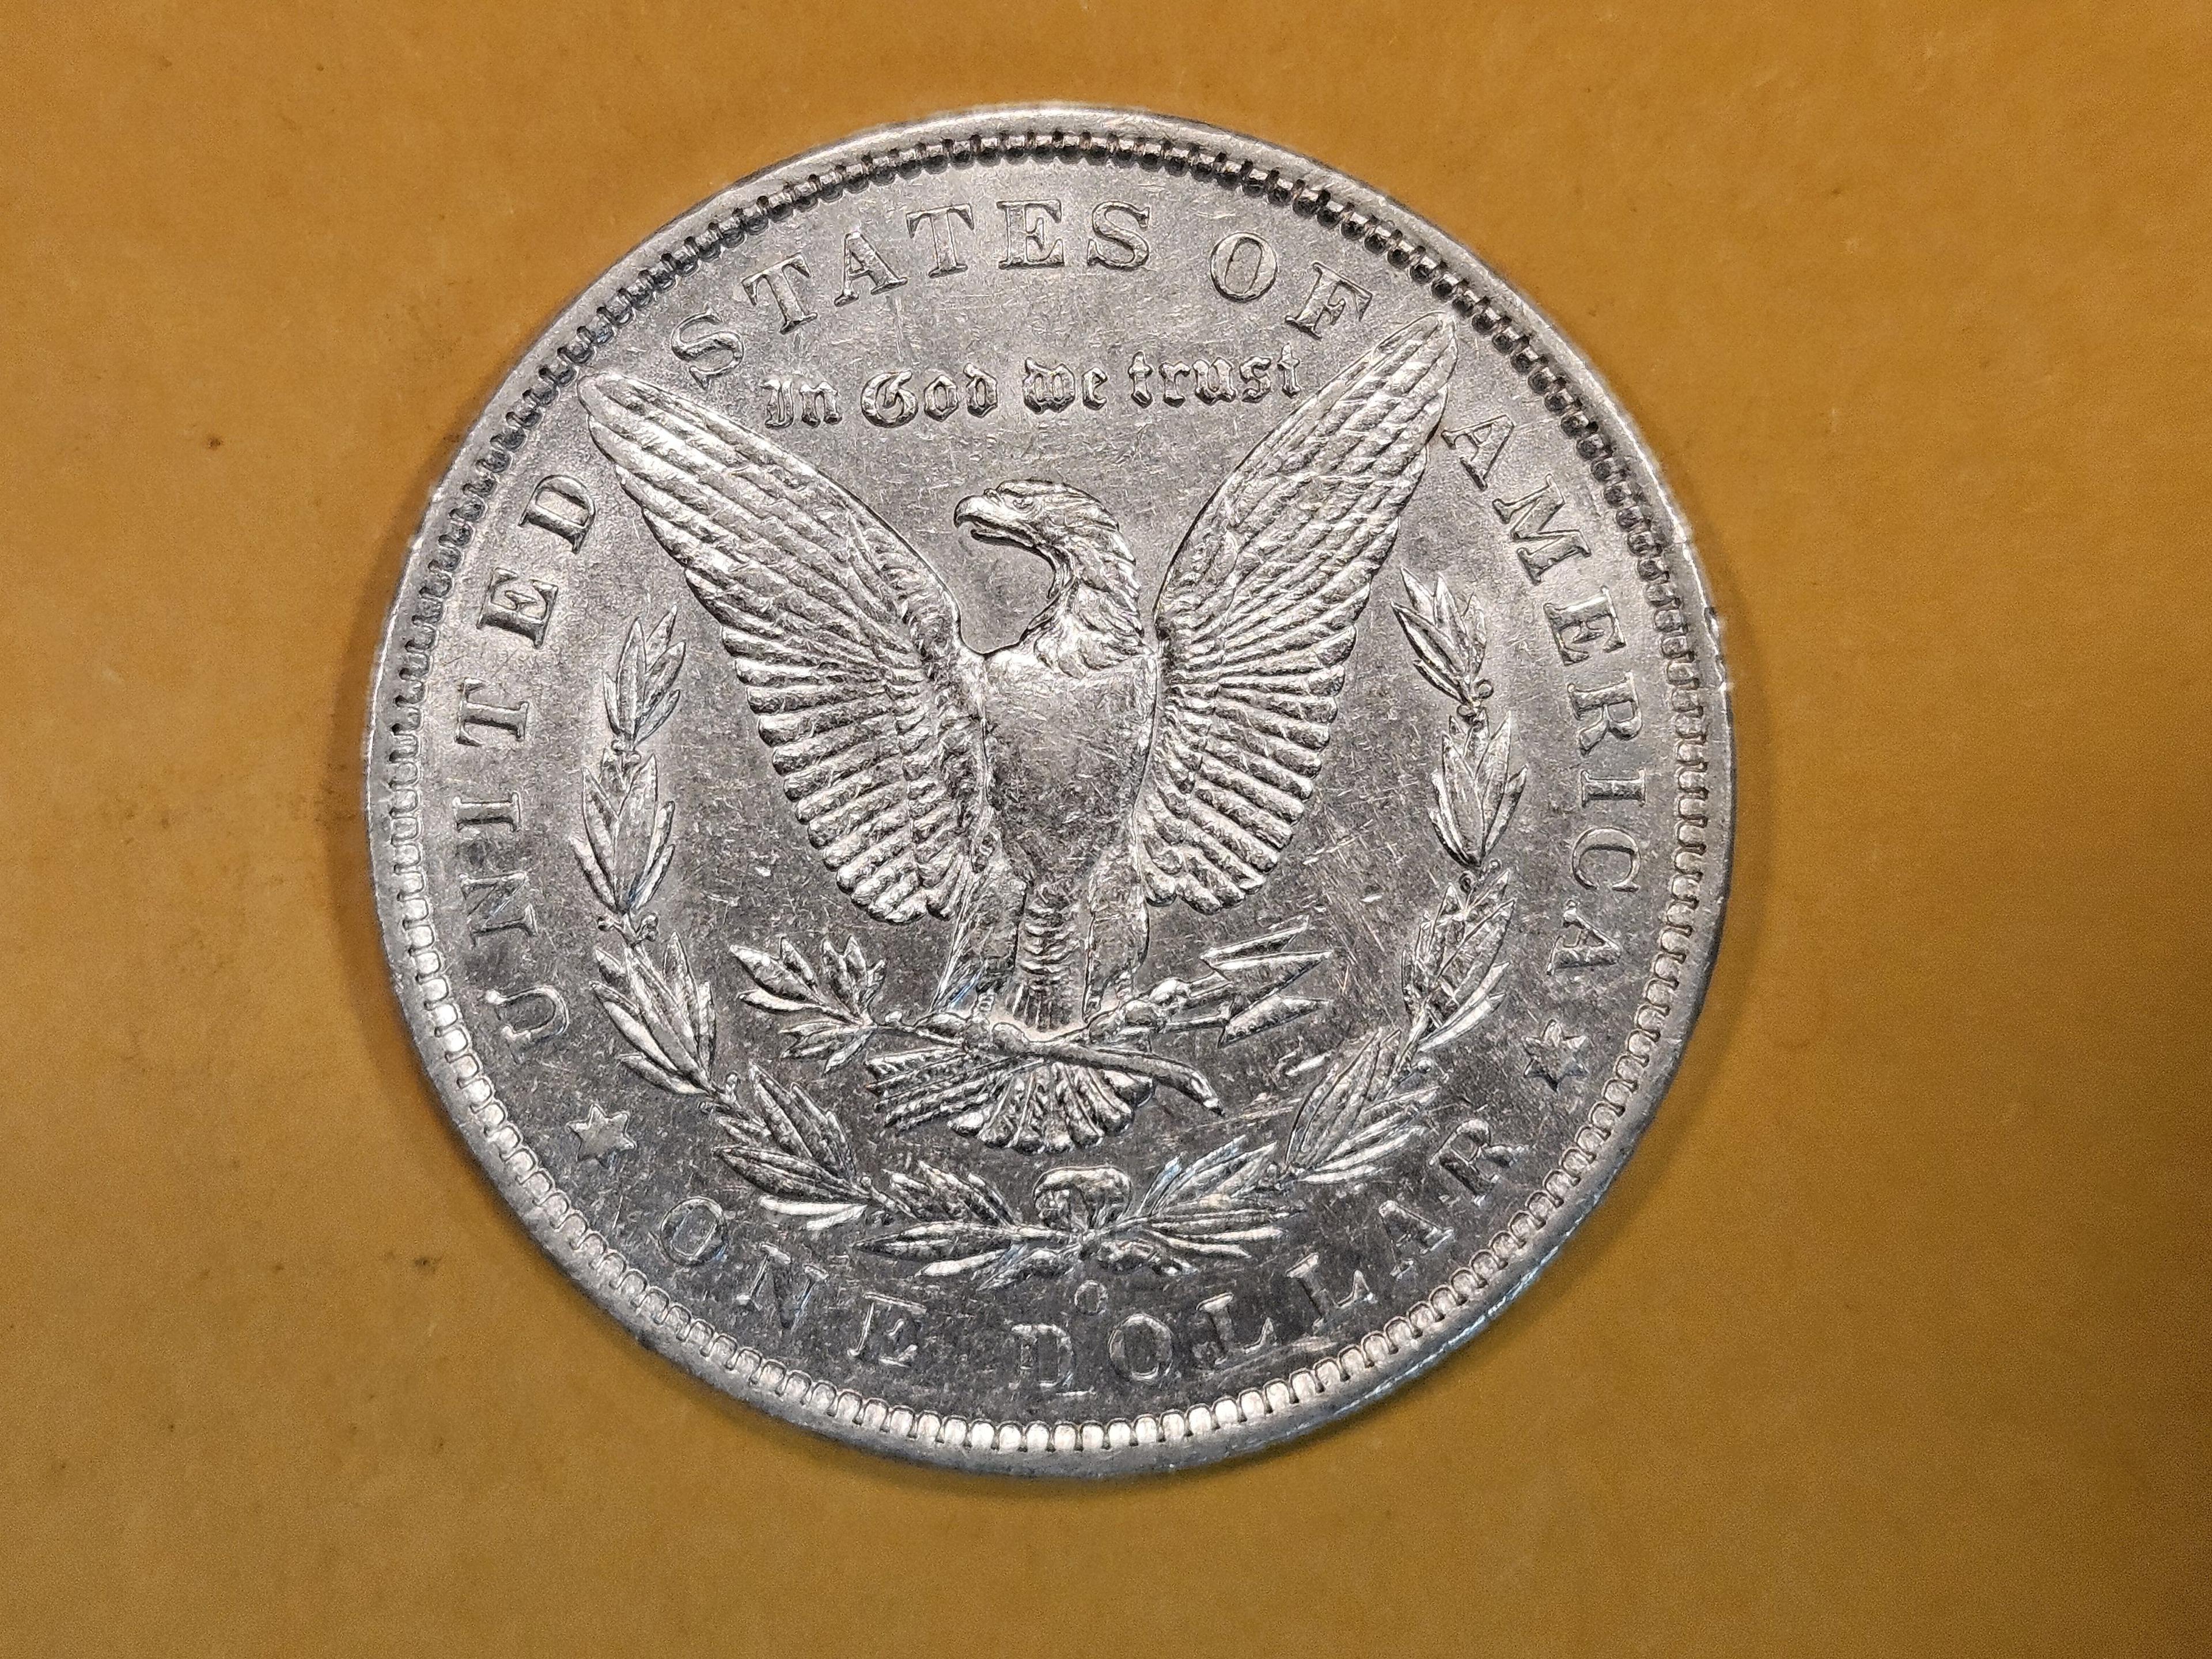 ** KEY GRADE! 1886-O Morgan Dollar in About Uncirculated plus